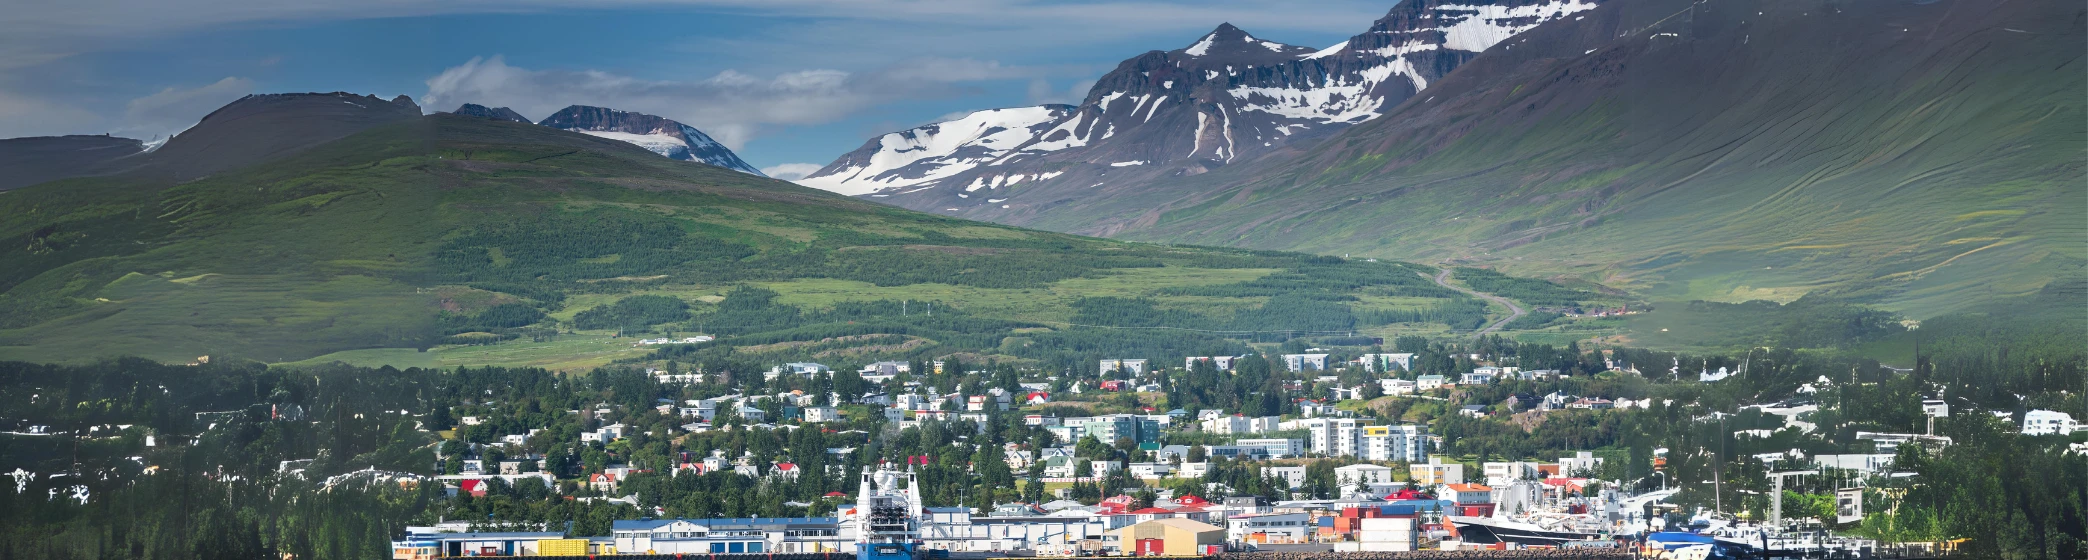 Alaska work and travel ไป รัฐ ไหน อเมริกา เมือง Anchorage Fairbanks Seward ฝึกงาน ทำงาน ต่างประเทศ เที่ยว อเมริกา USA โครงการแลกเปลี่ยน วัฒนธรรม newstep new step